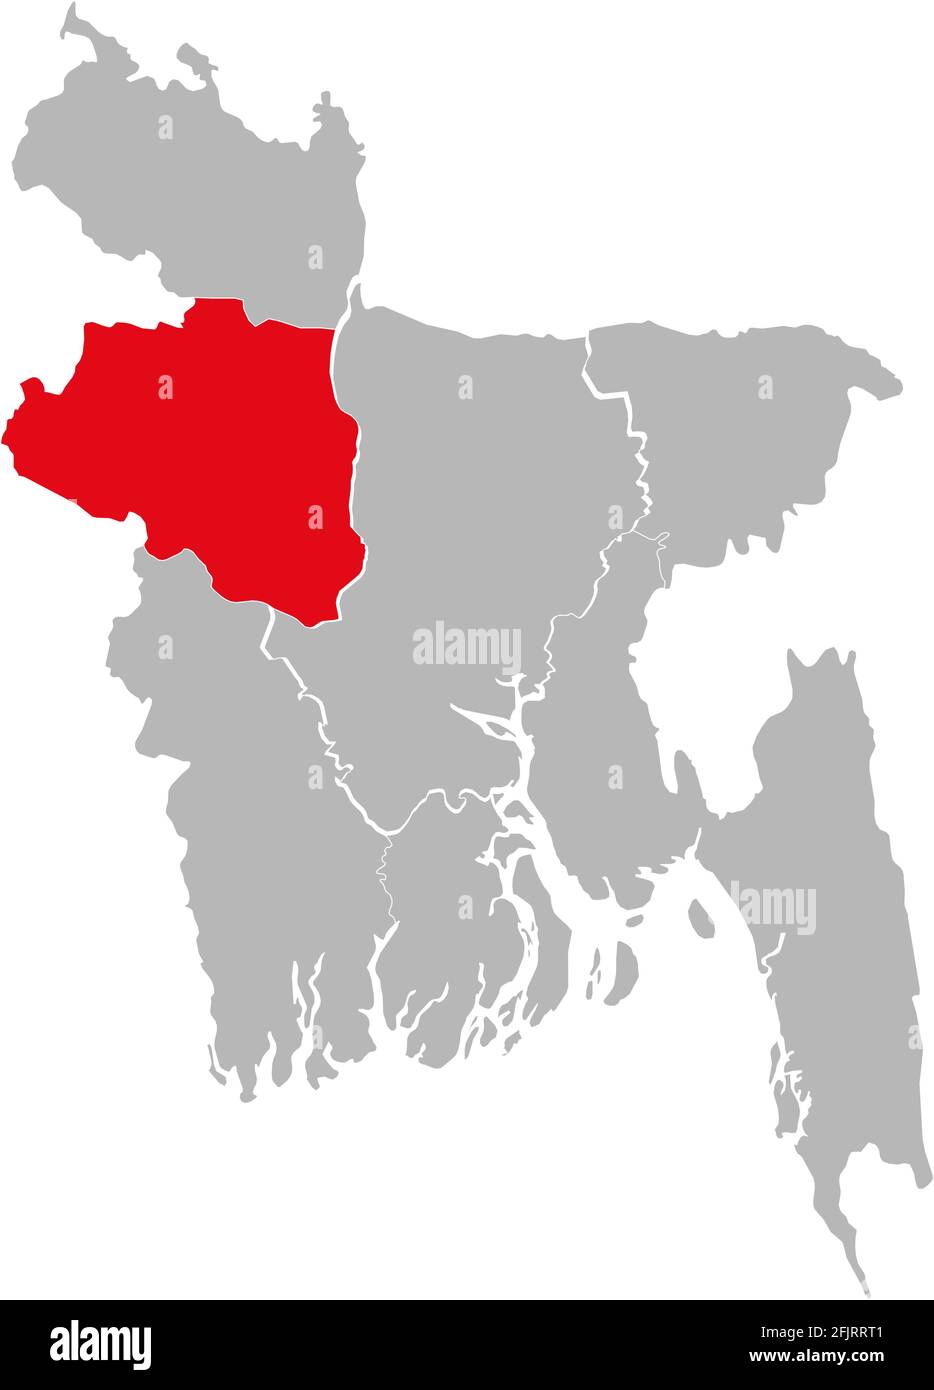 Rajshahi province highlighted on Bangladesh map. Gray background. Stock Vector